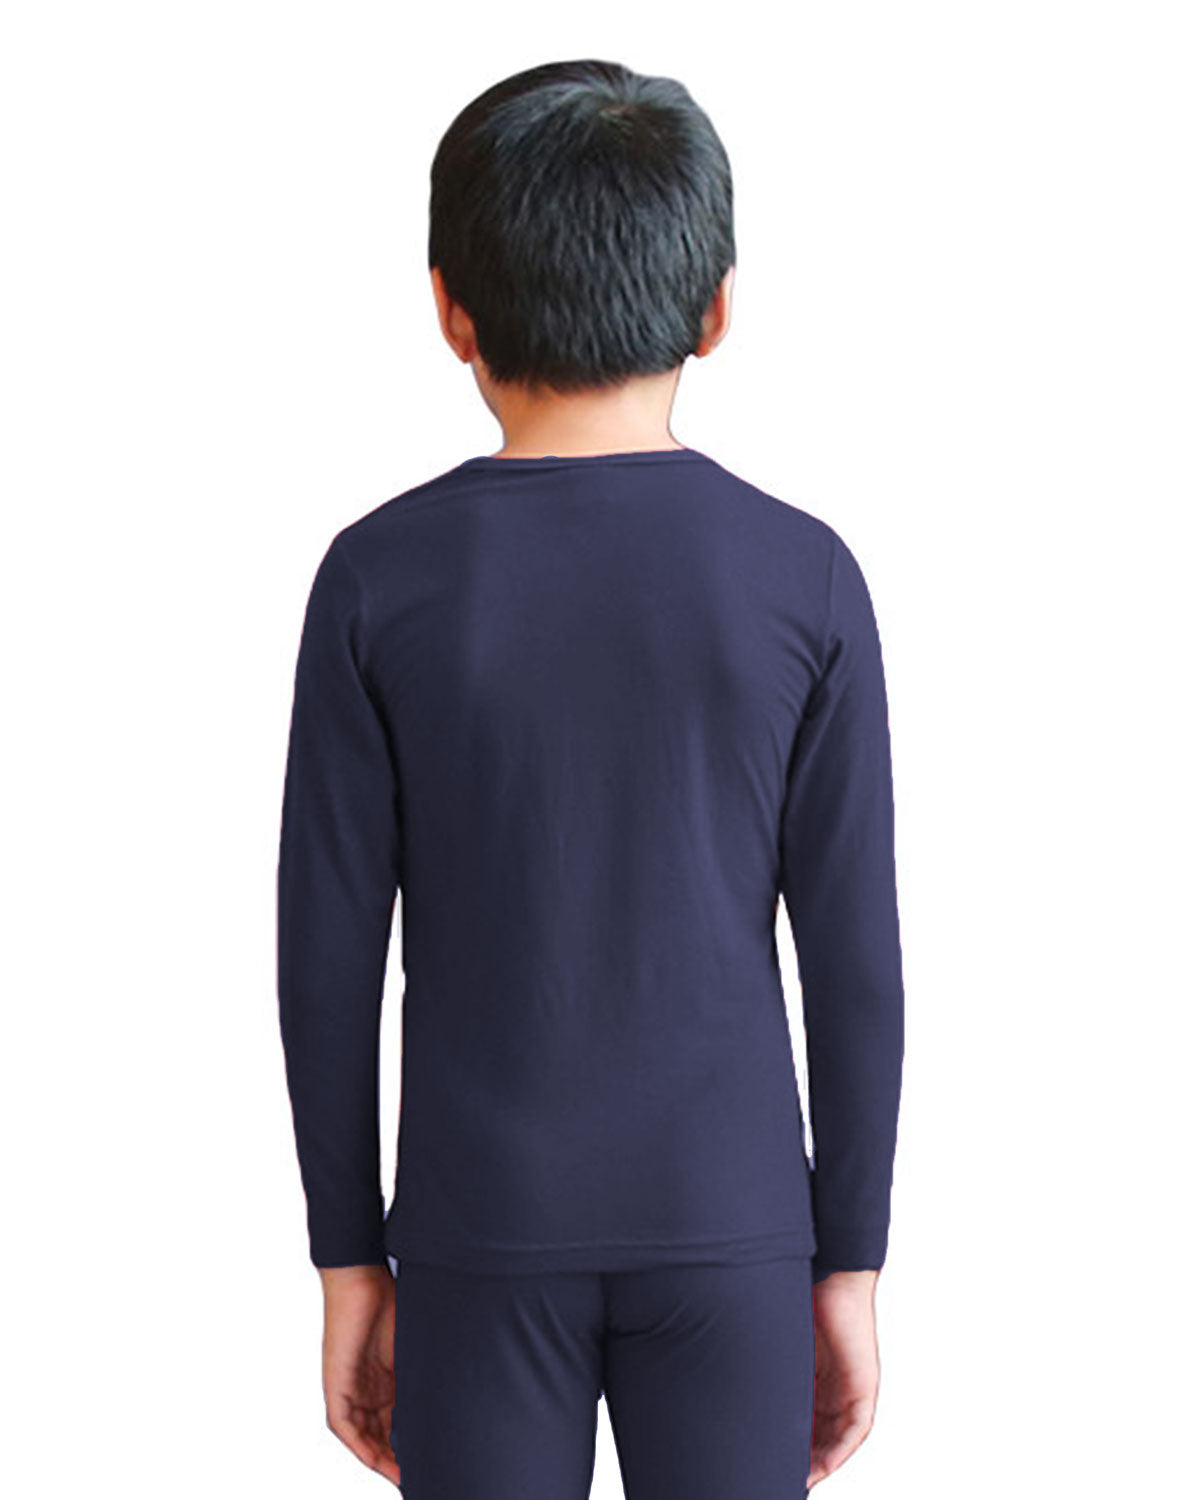 Boys Thermal Underwear Long John Top Ultra Soft Stretch Hockey Shirt LANBAOSI